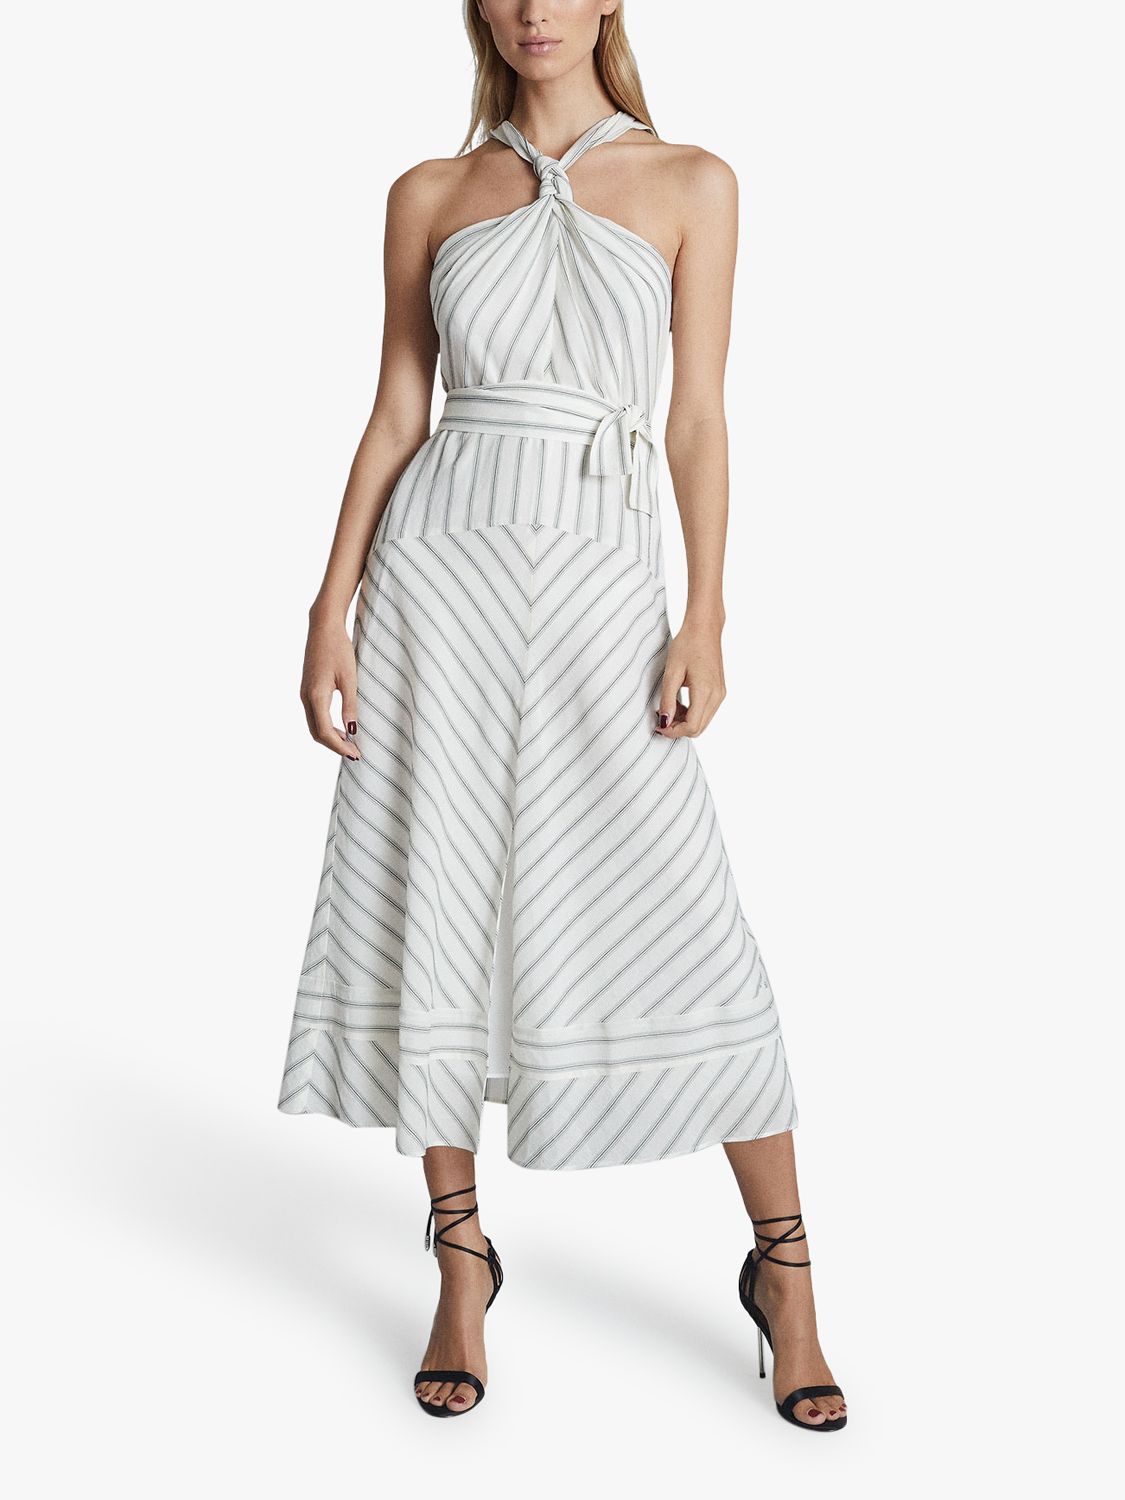 Reiss Bea Striped Dress, White/Grey